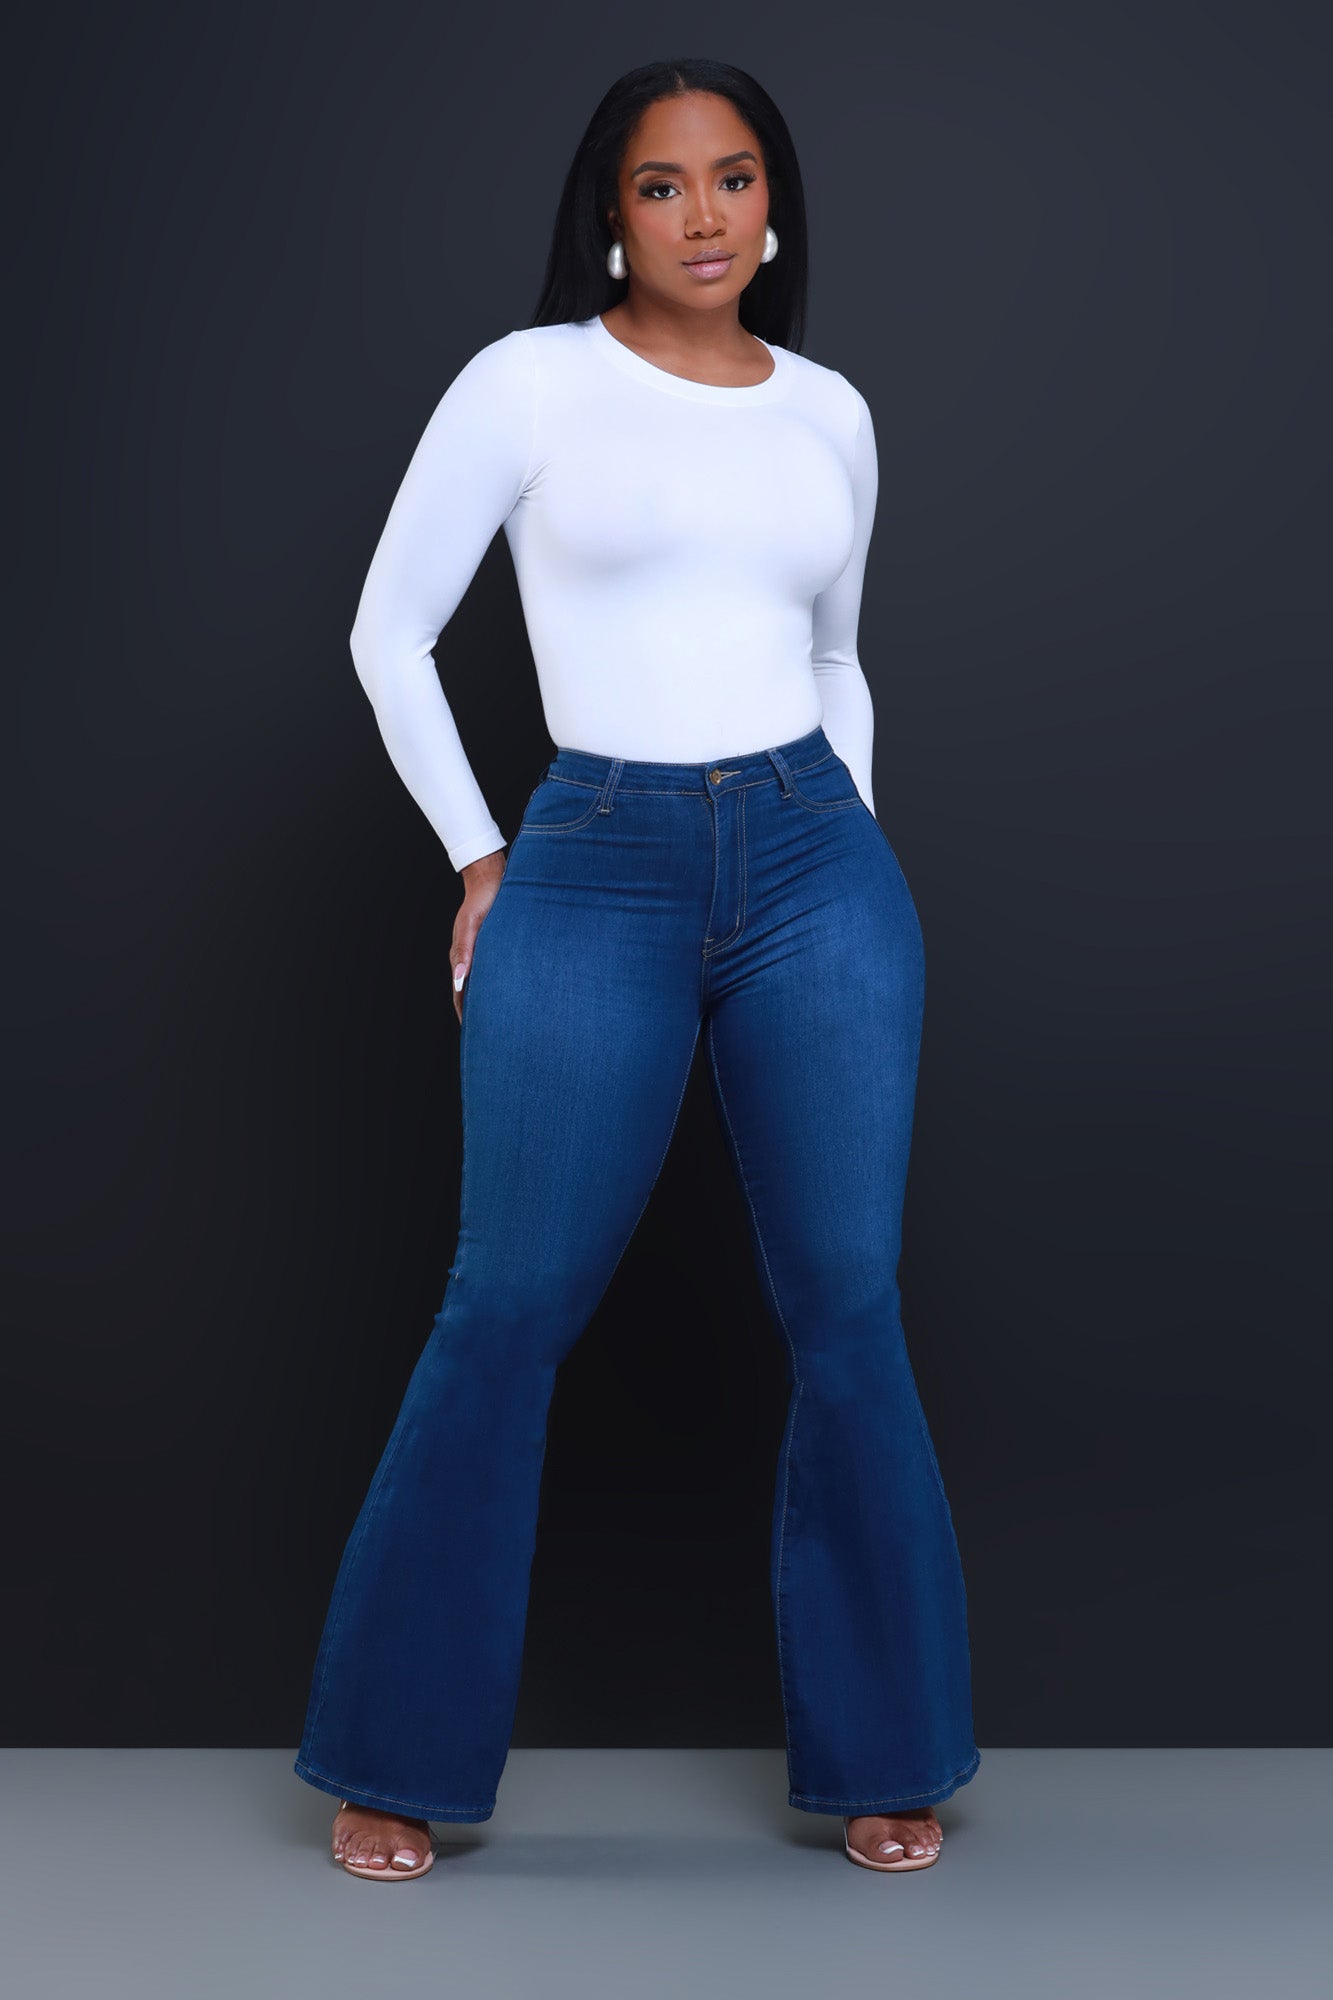 Bing High Waist Stretchy Bottom Jeans - Medium - A Posh